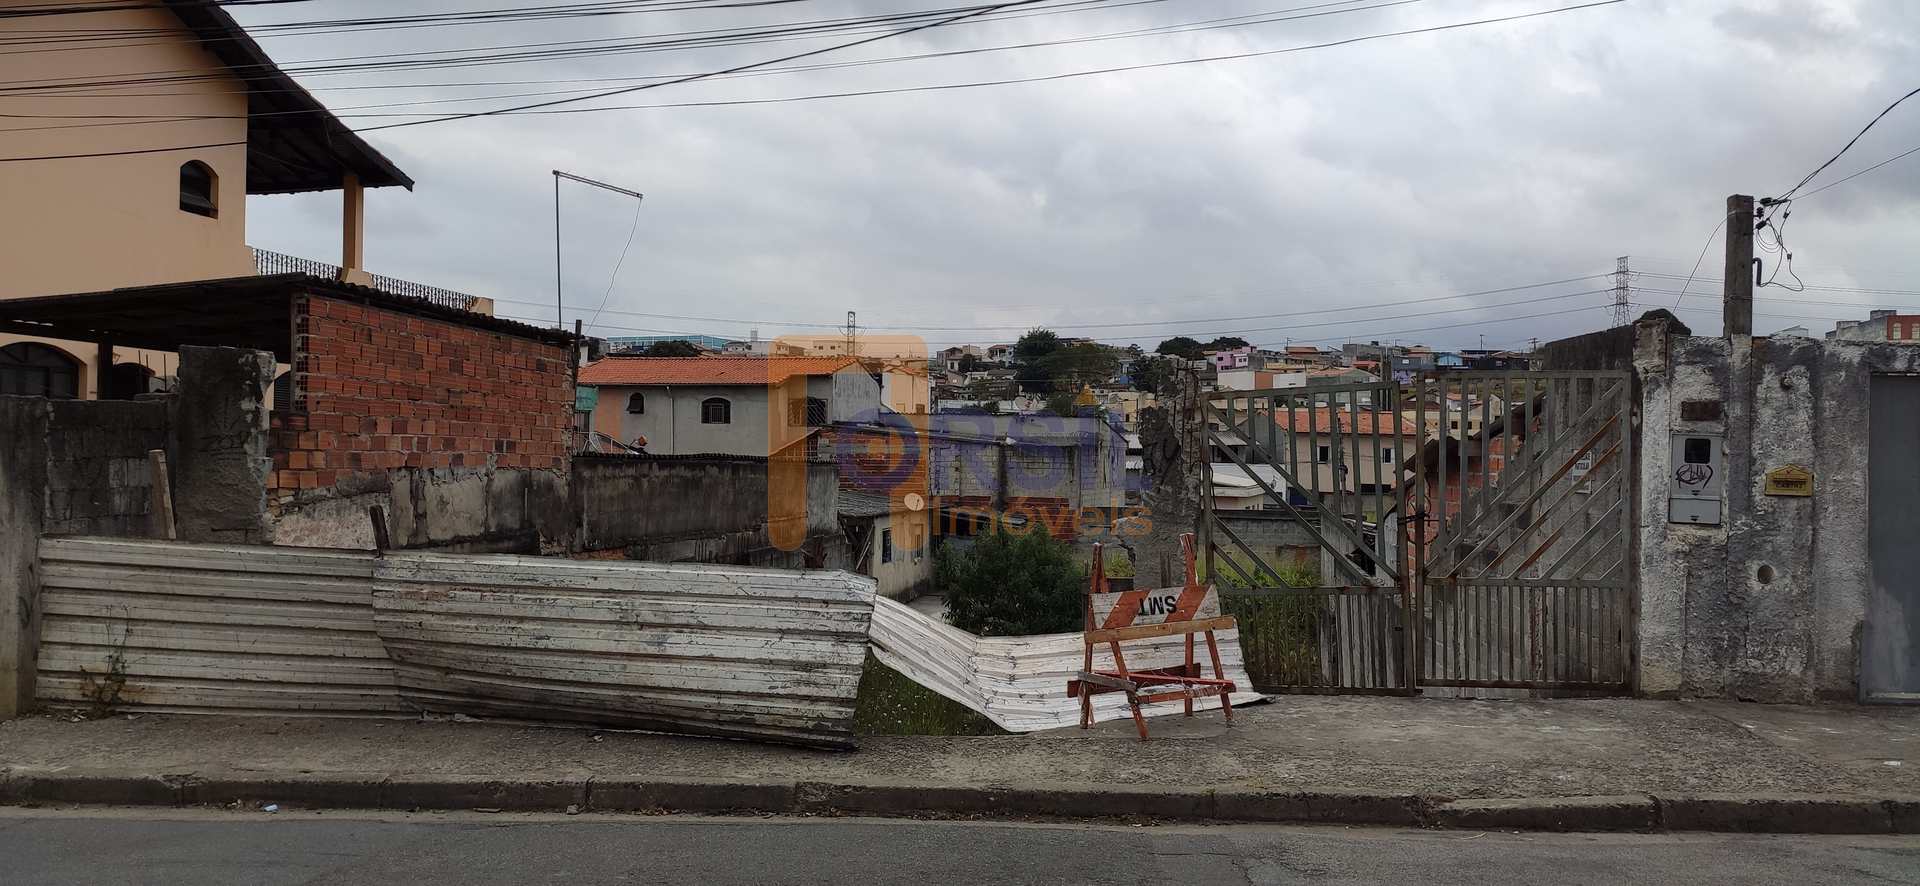 Terreno, Vila Natal, Mogi das Cruzes - R$ 139 mil, Cod: 1816